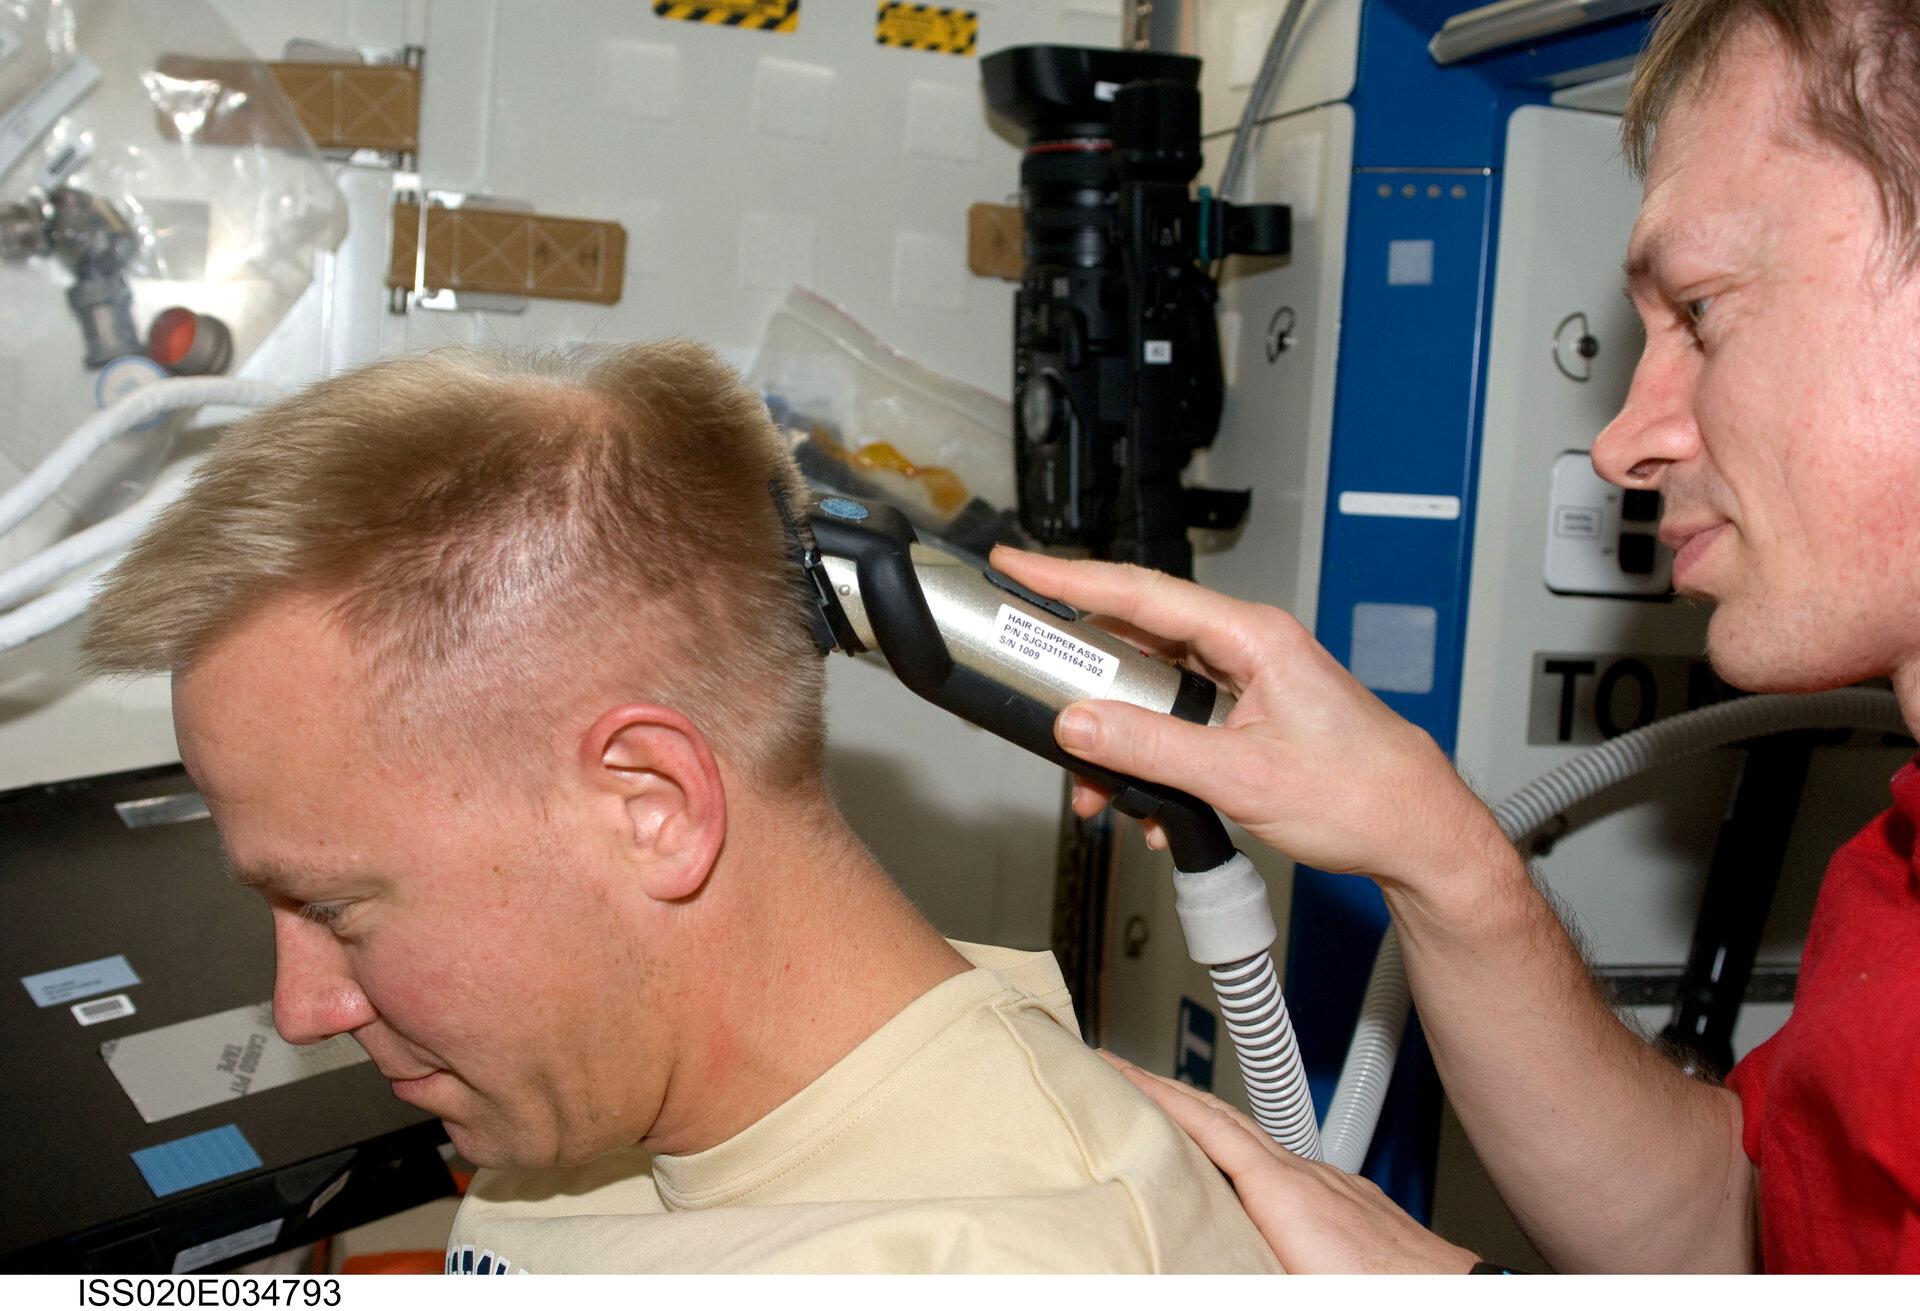 Frank De Winne cuts Tim Kopra's hair using hair clippers fashioned with a vacuum device